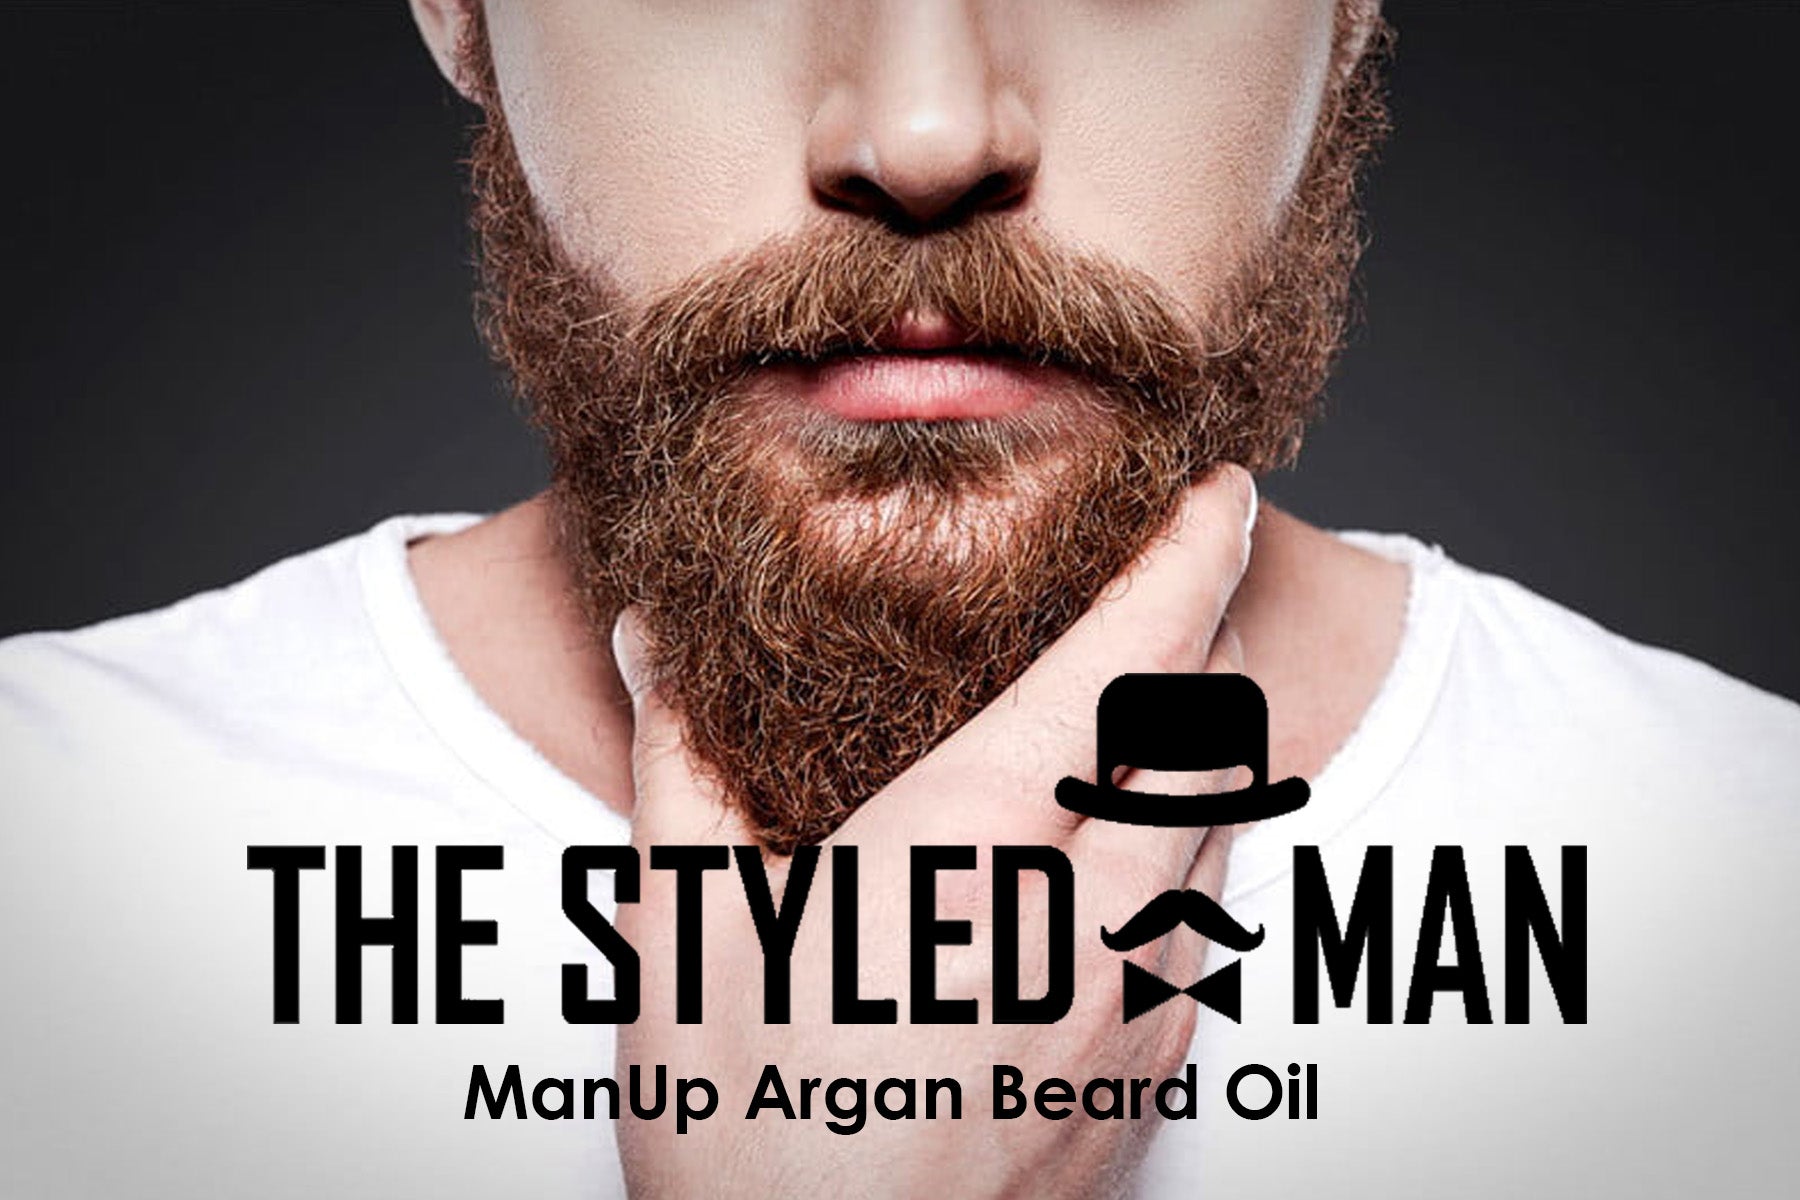 ManUp Argan Beard Oil